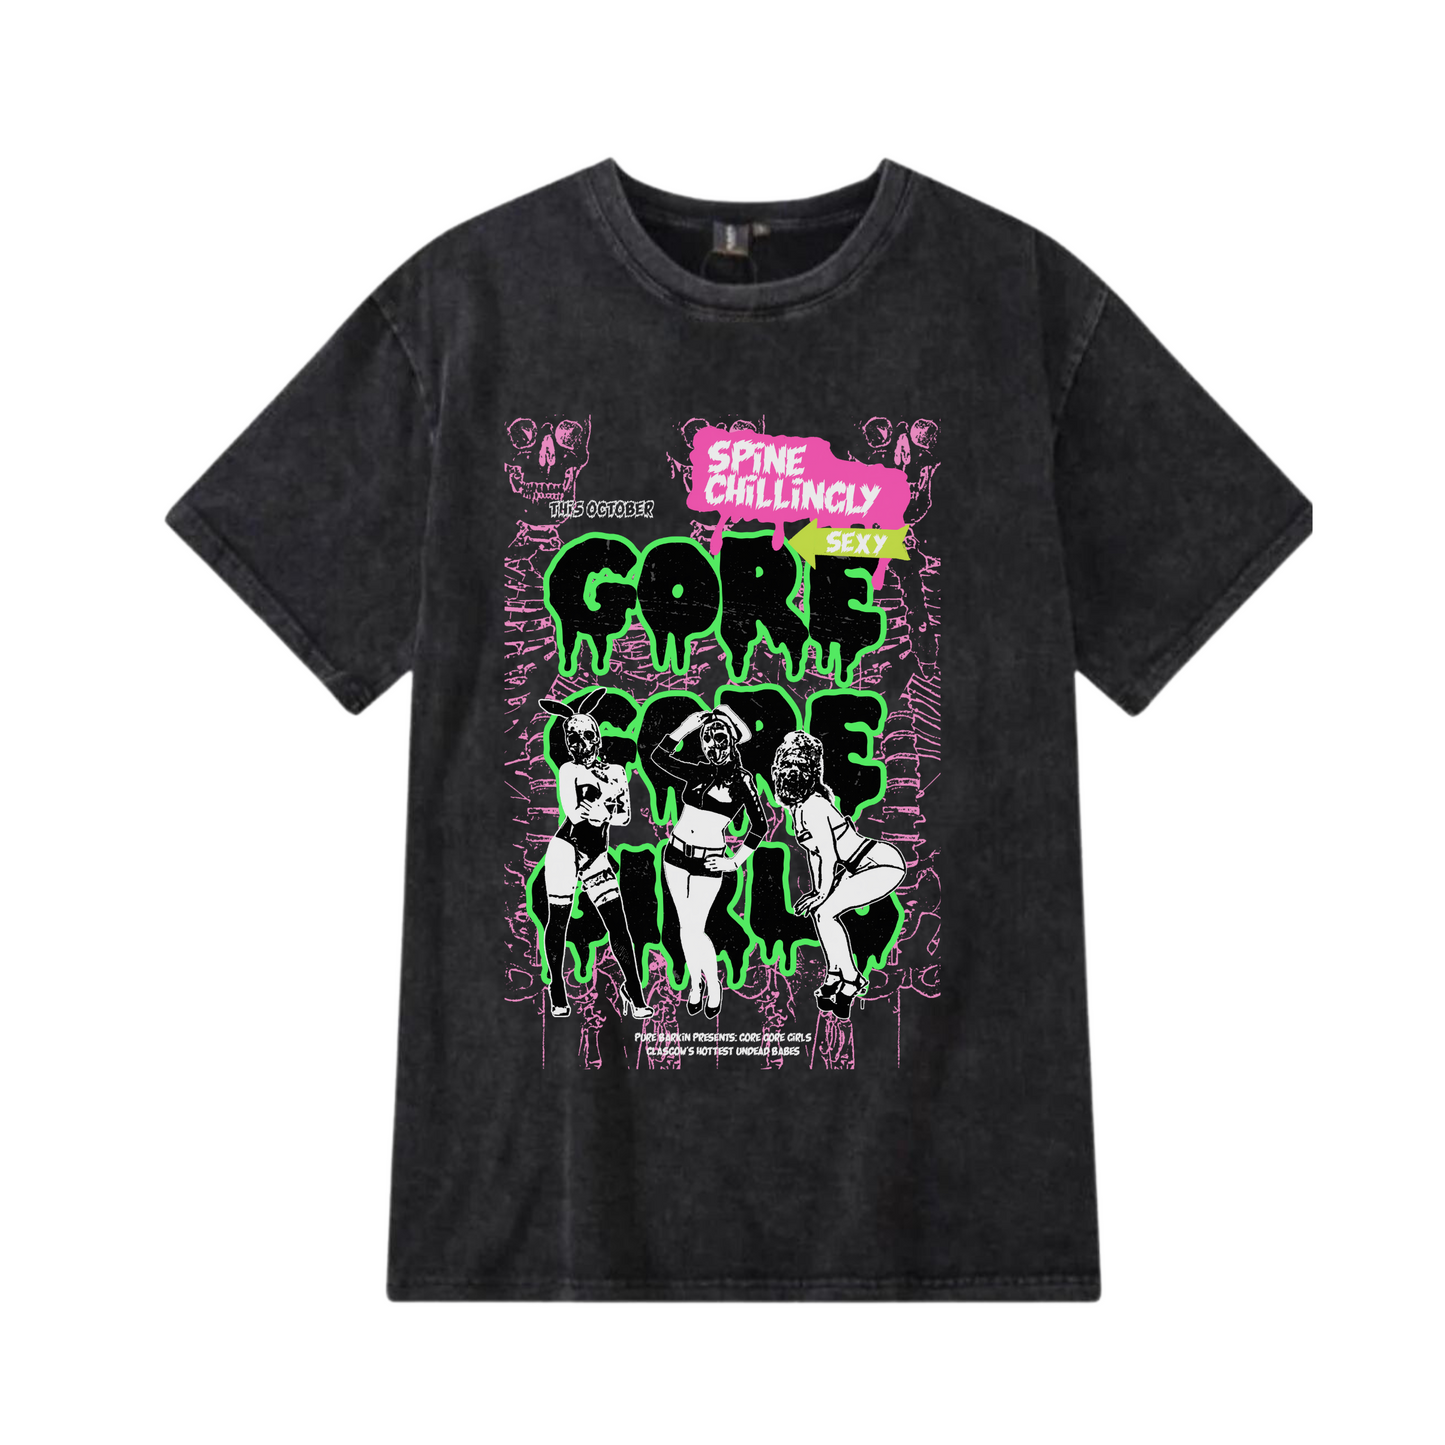 Gore Gore Girls Tshirt - PRE-ORDER